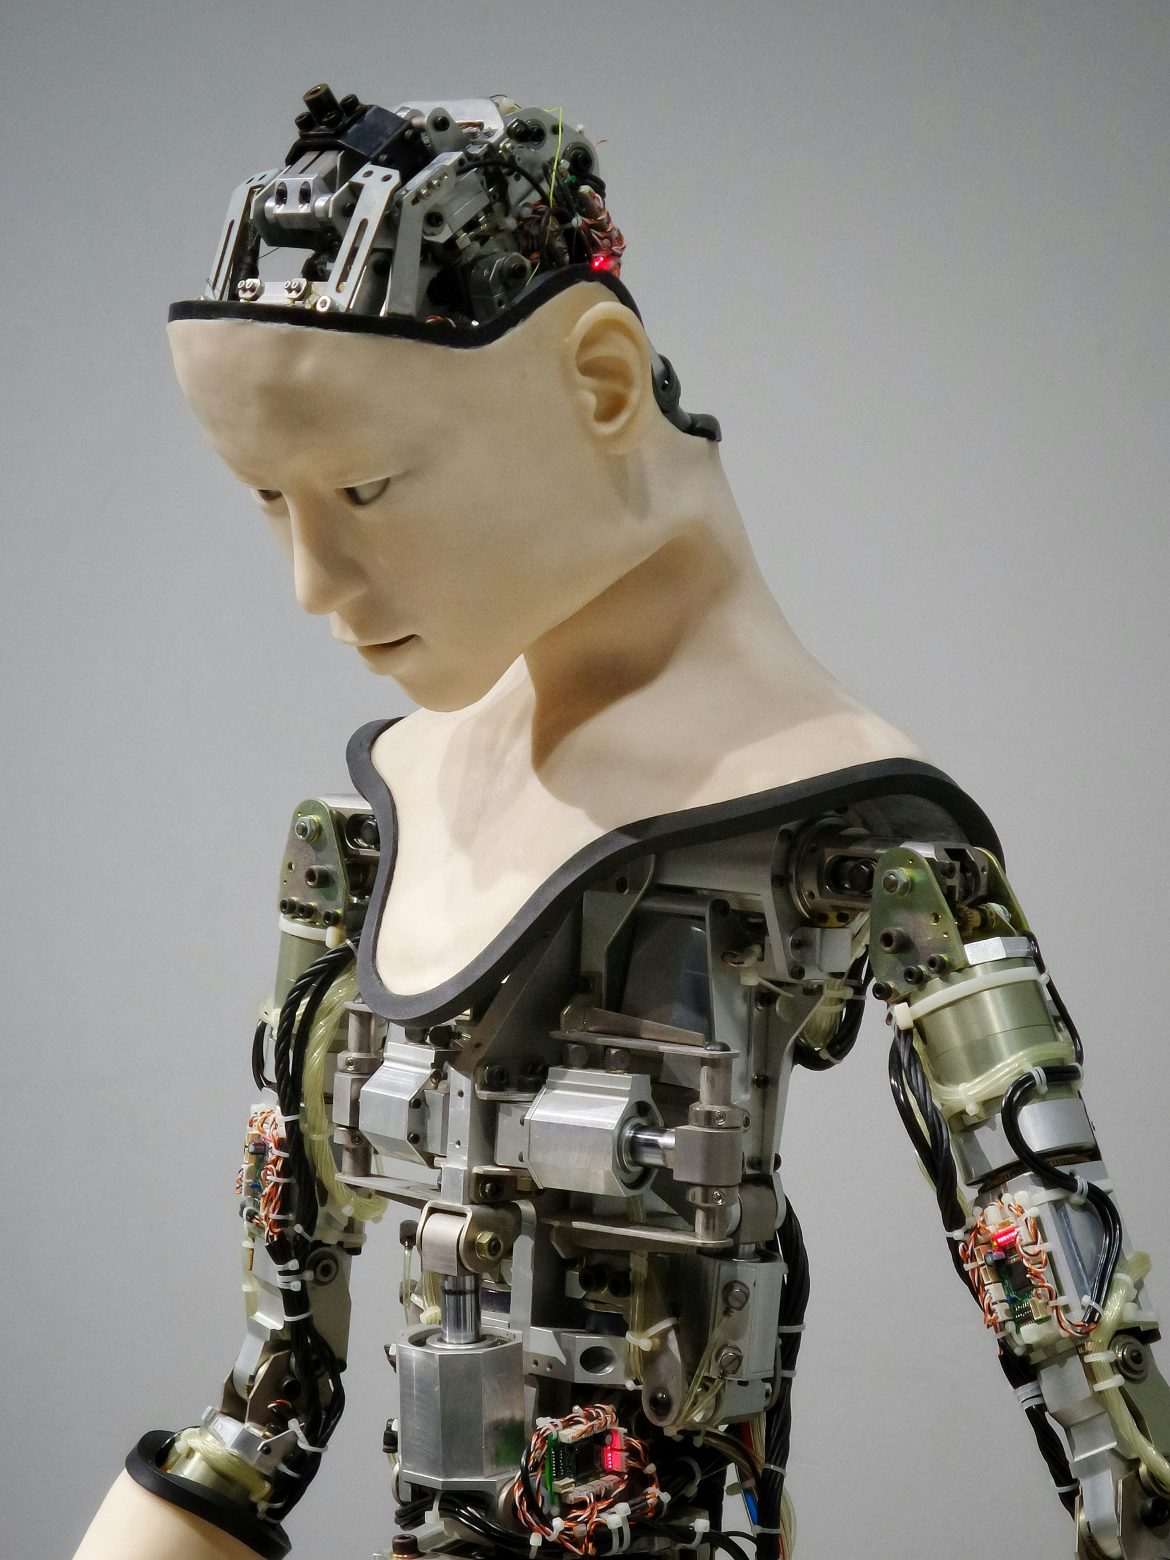 How Will Artificial Intelligence Revolutionize Economies?